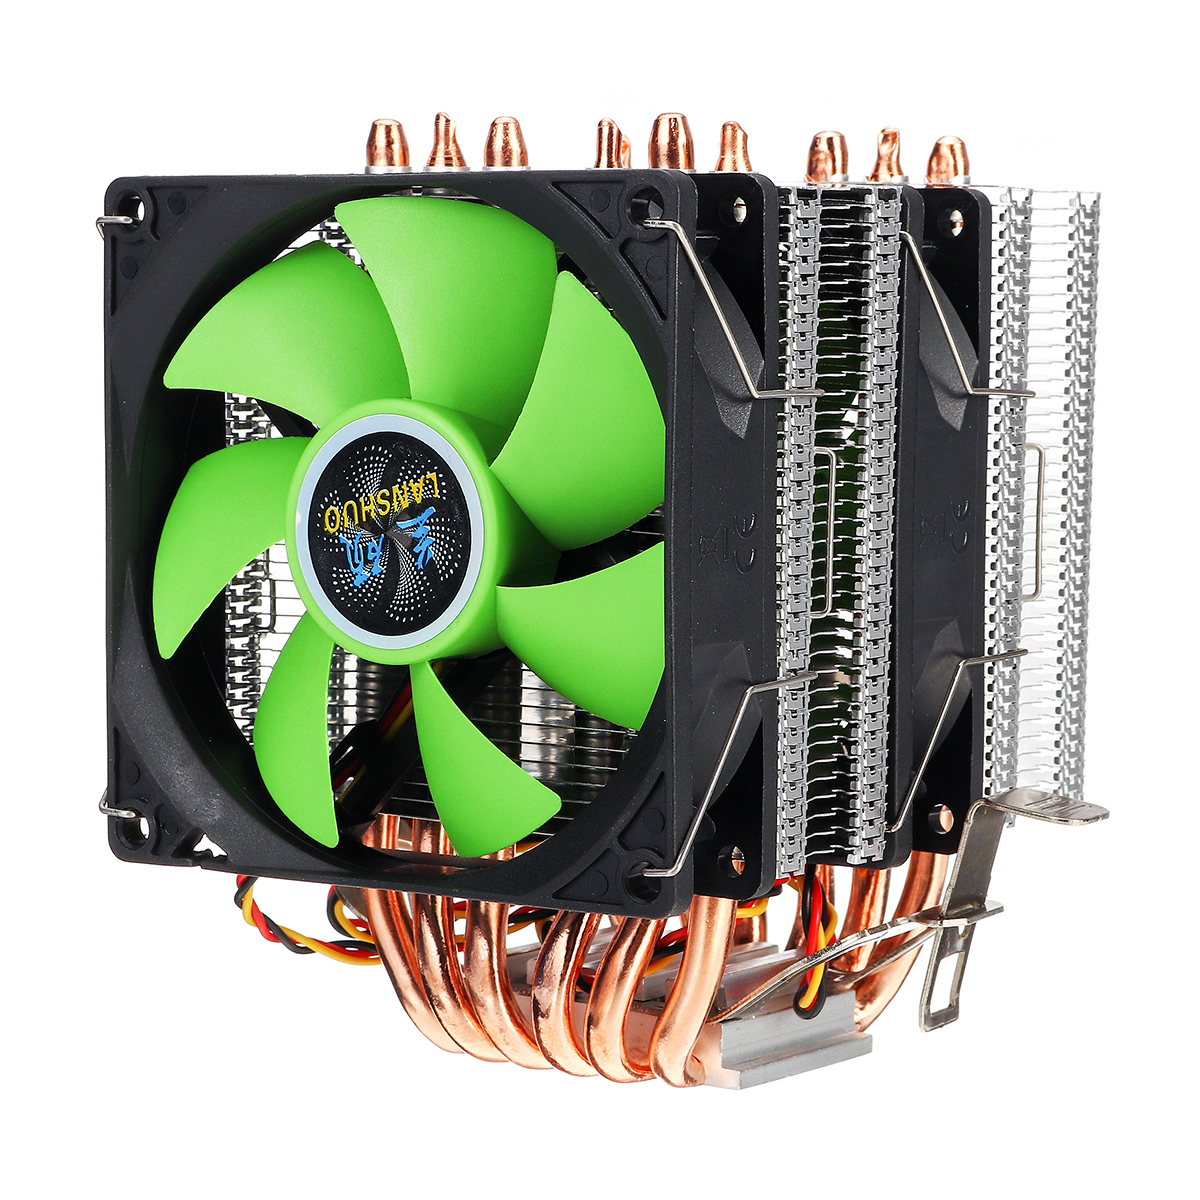 Aurora 3 Pin Double Fan 6 Copper Tube Dual Tower CPU Cooling Fan Cooler Heatsink for Intel AMD 4